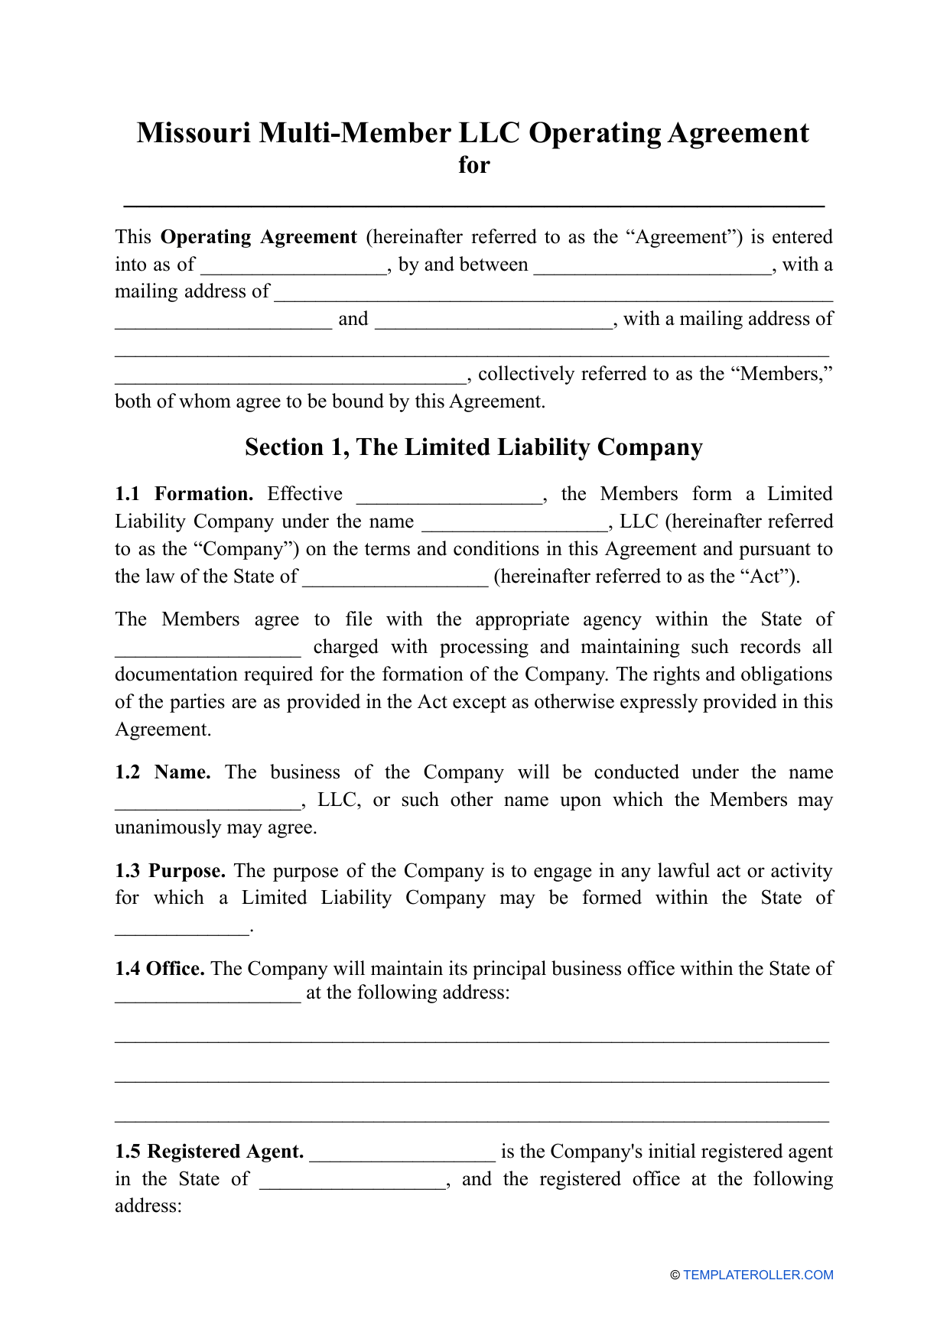 Multi-Member LLC Operating Agreement Template - Missouri, Page 1